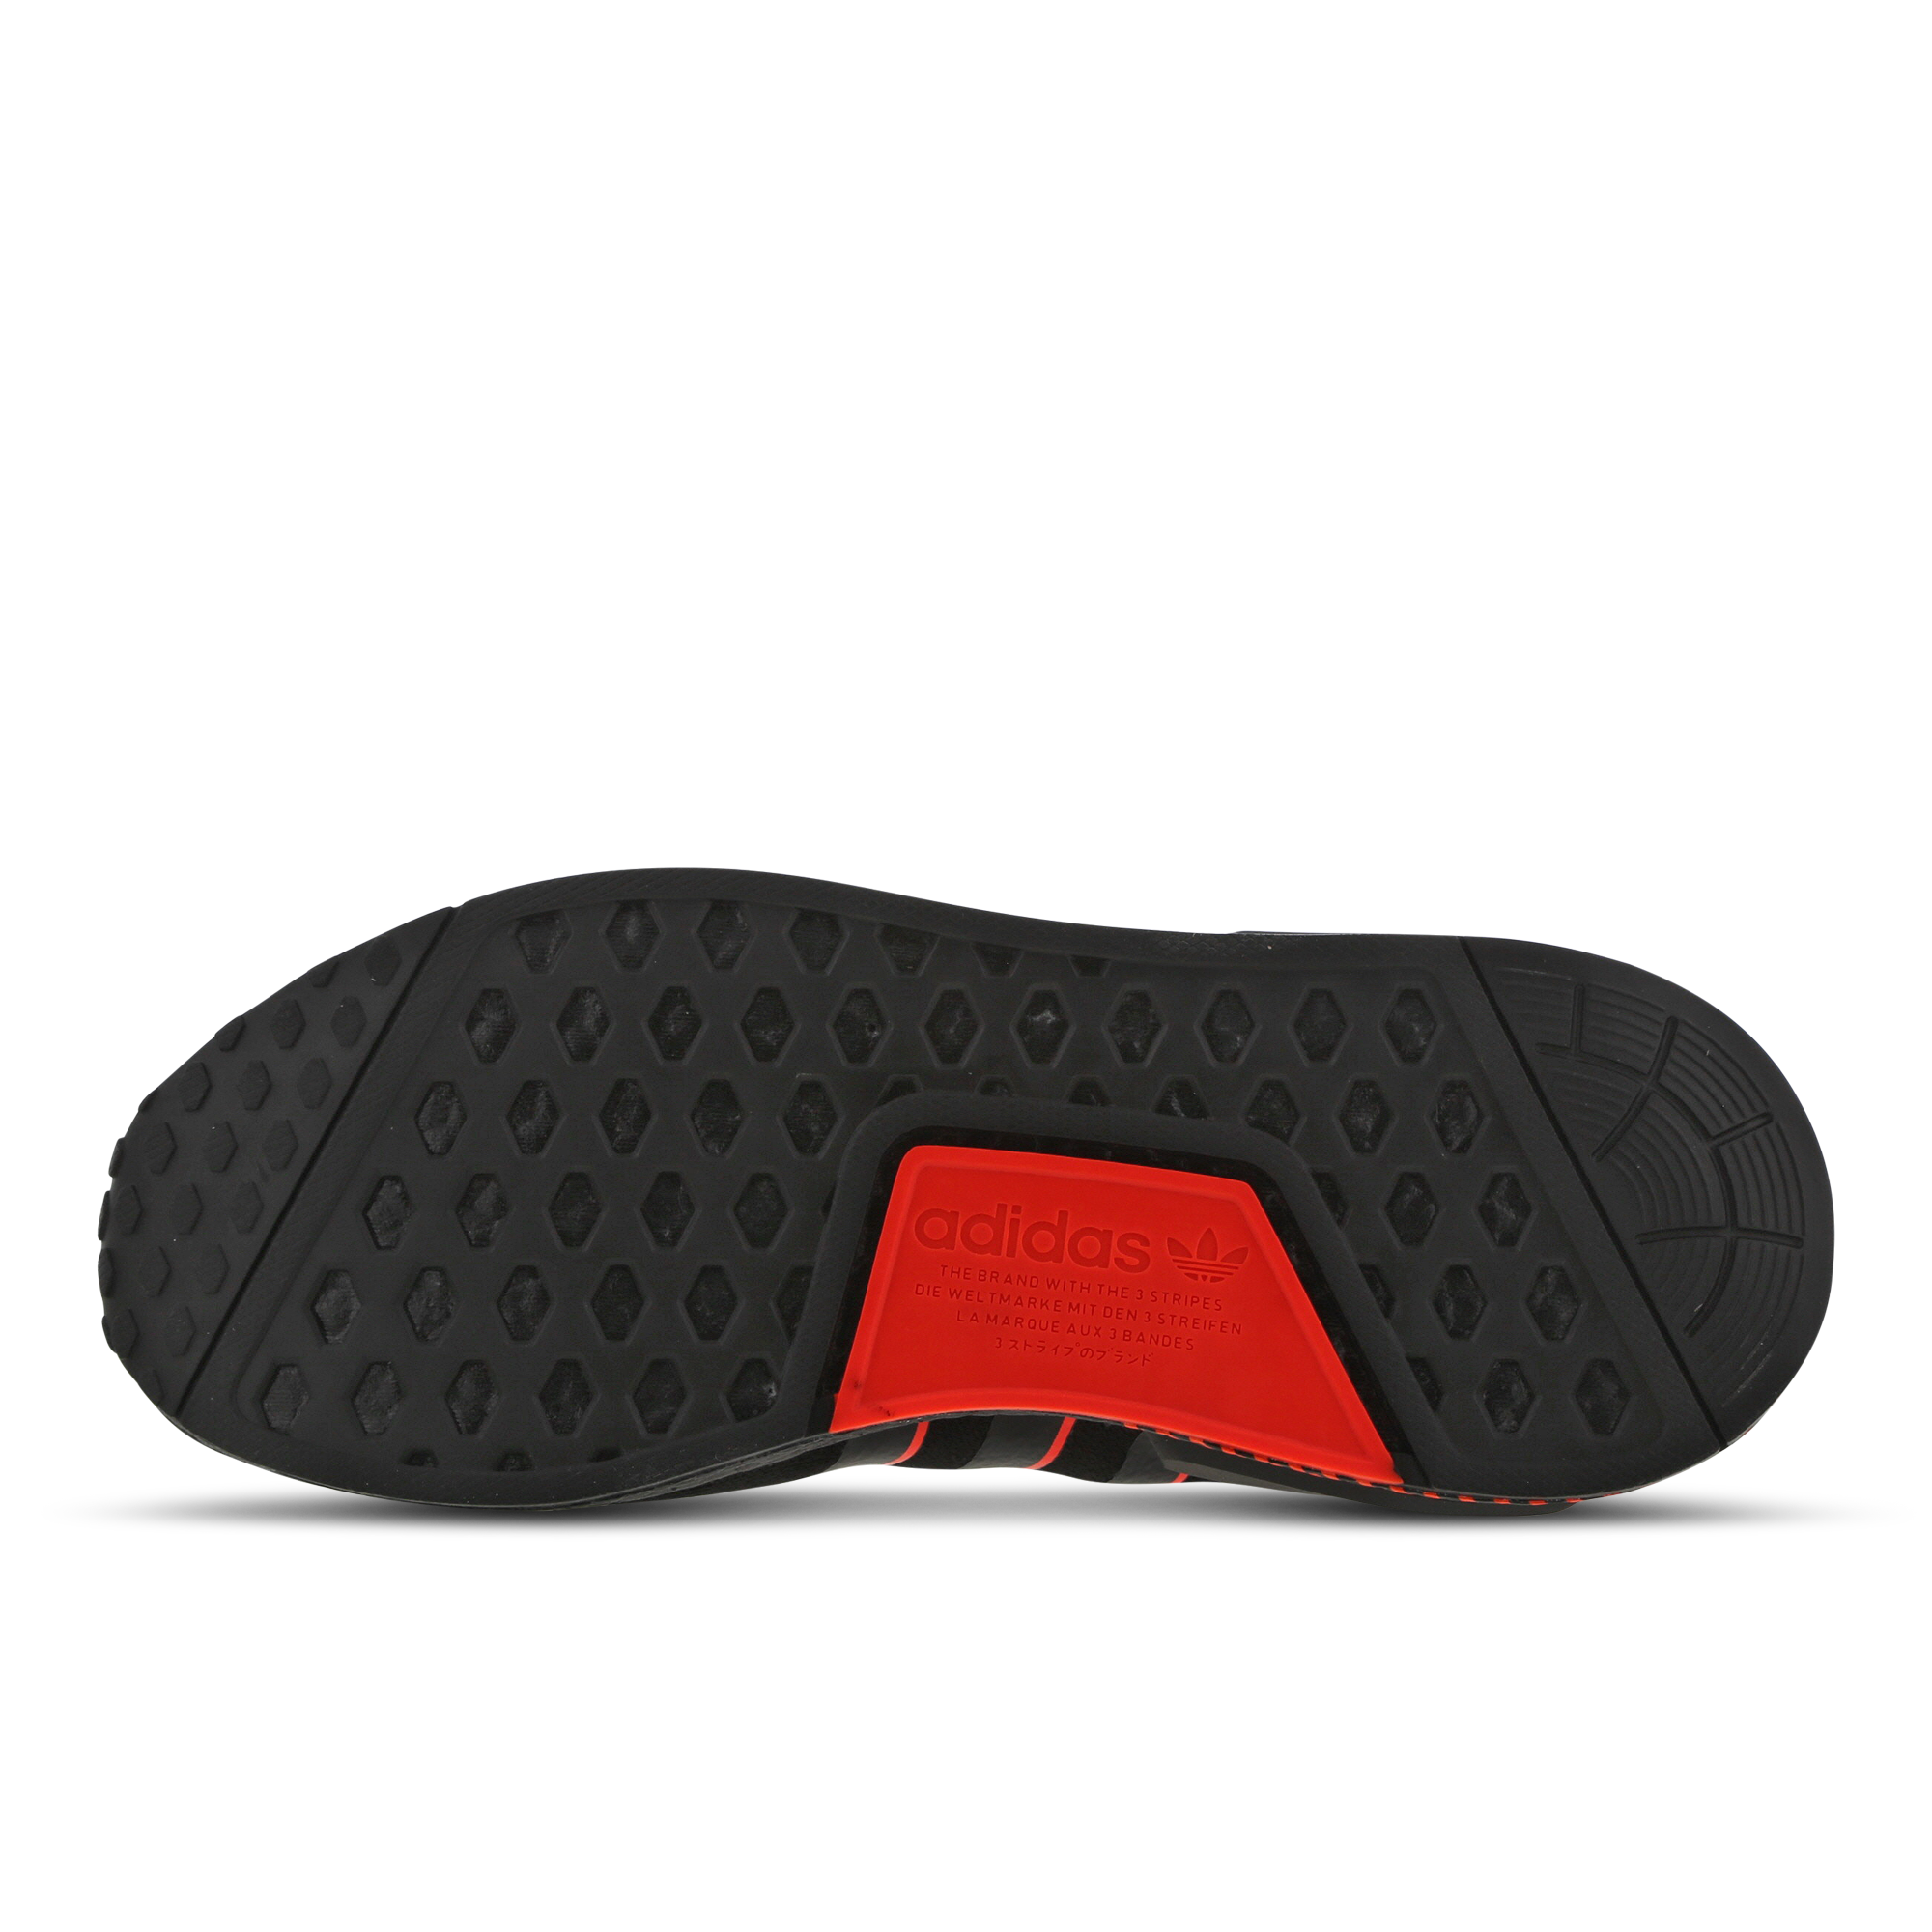 Adidas NMD R1 RIPSTOP CORE BLACK LUSH RED Ebay